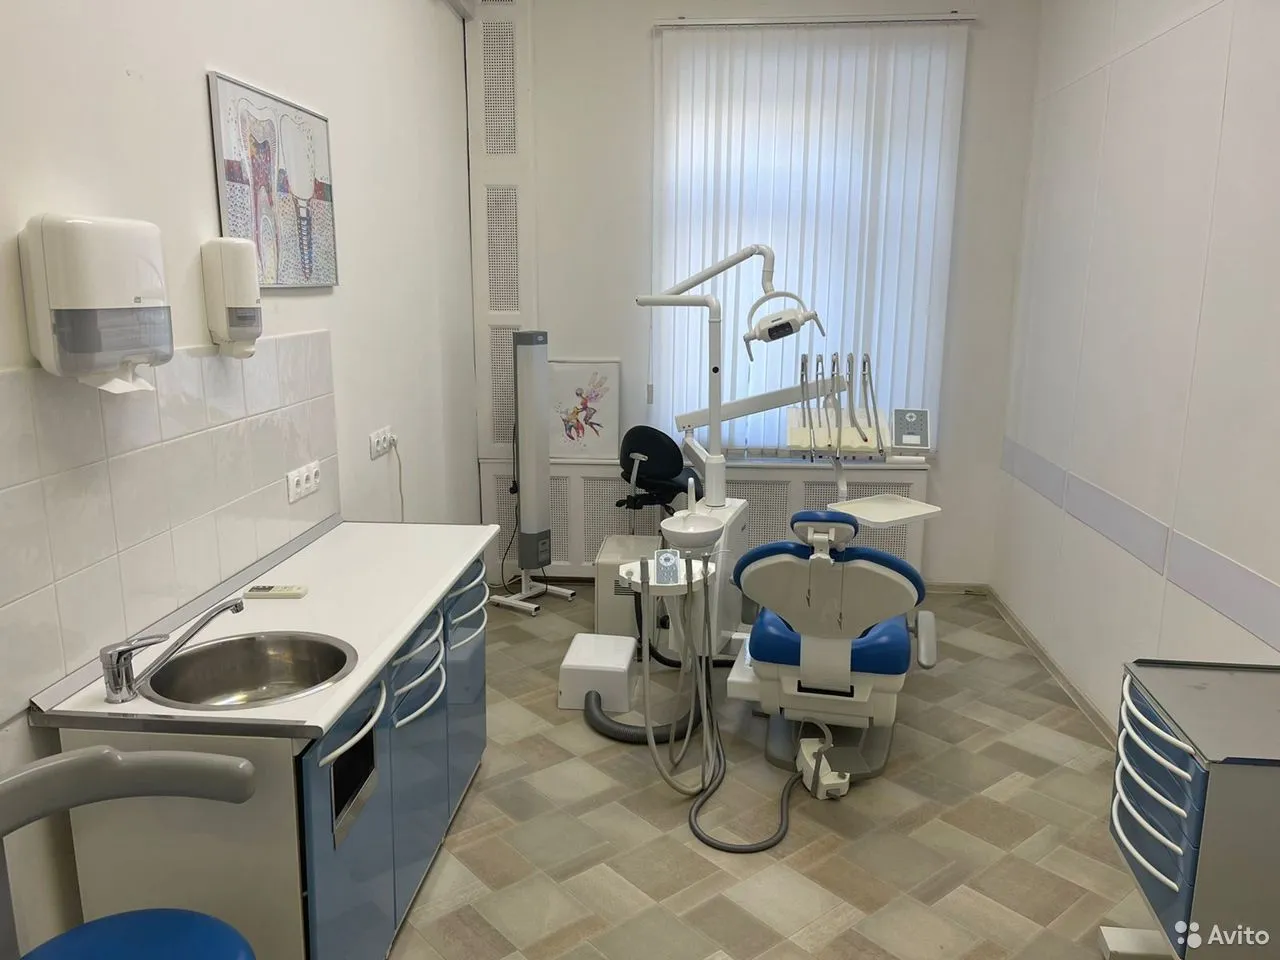  аренда стоматологического кабинета